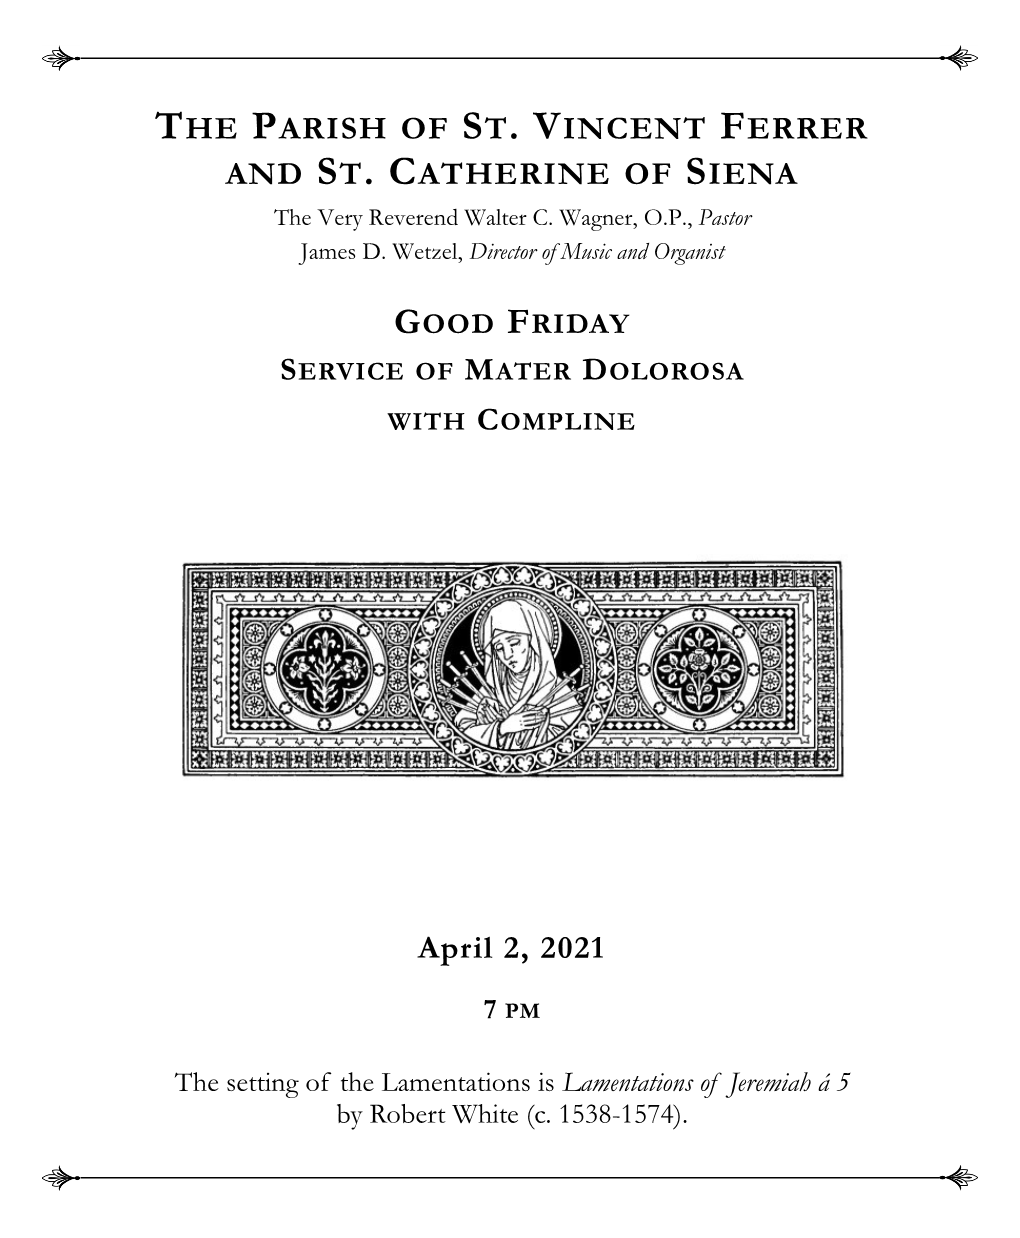 Good Friday: Service of Mater Dolorosa